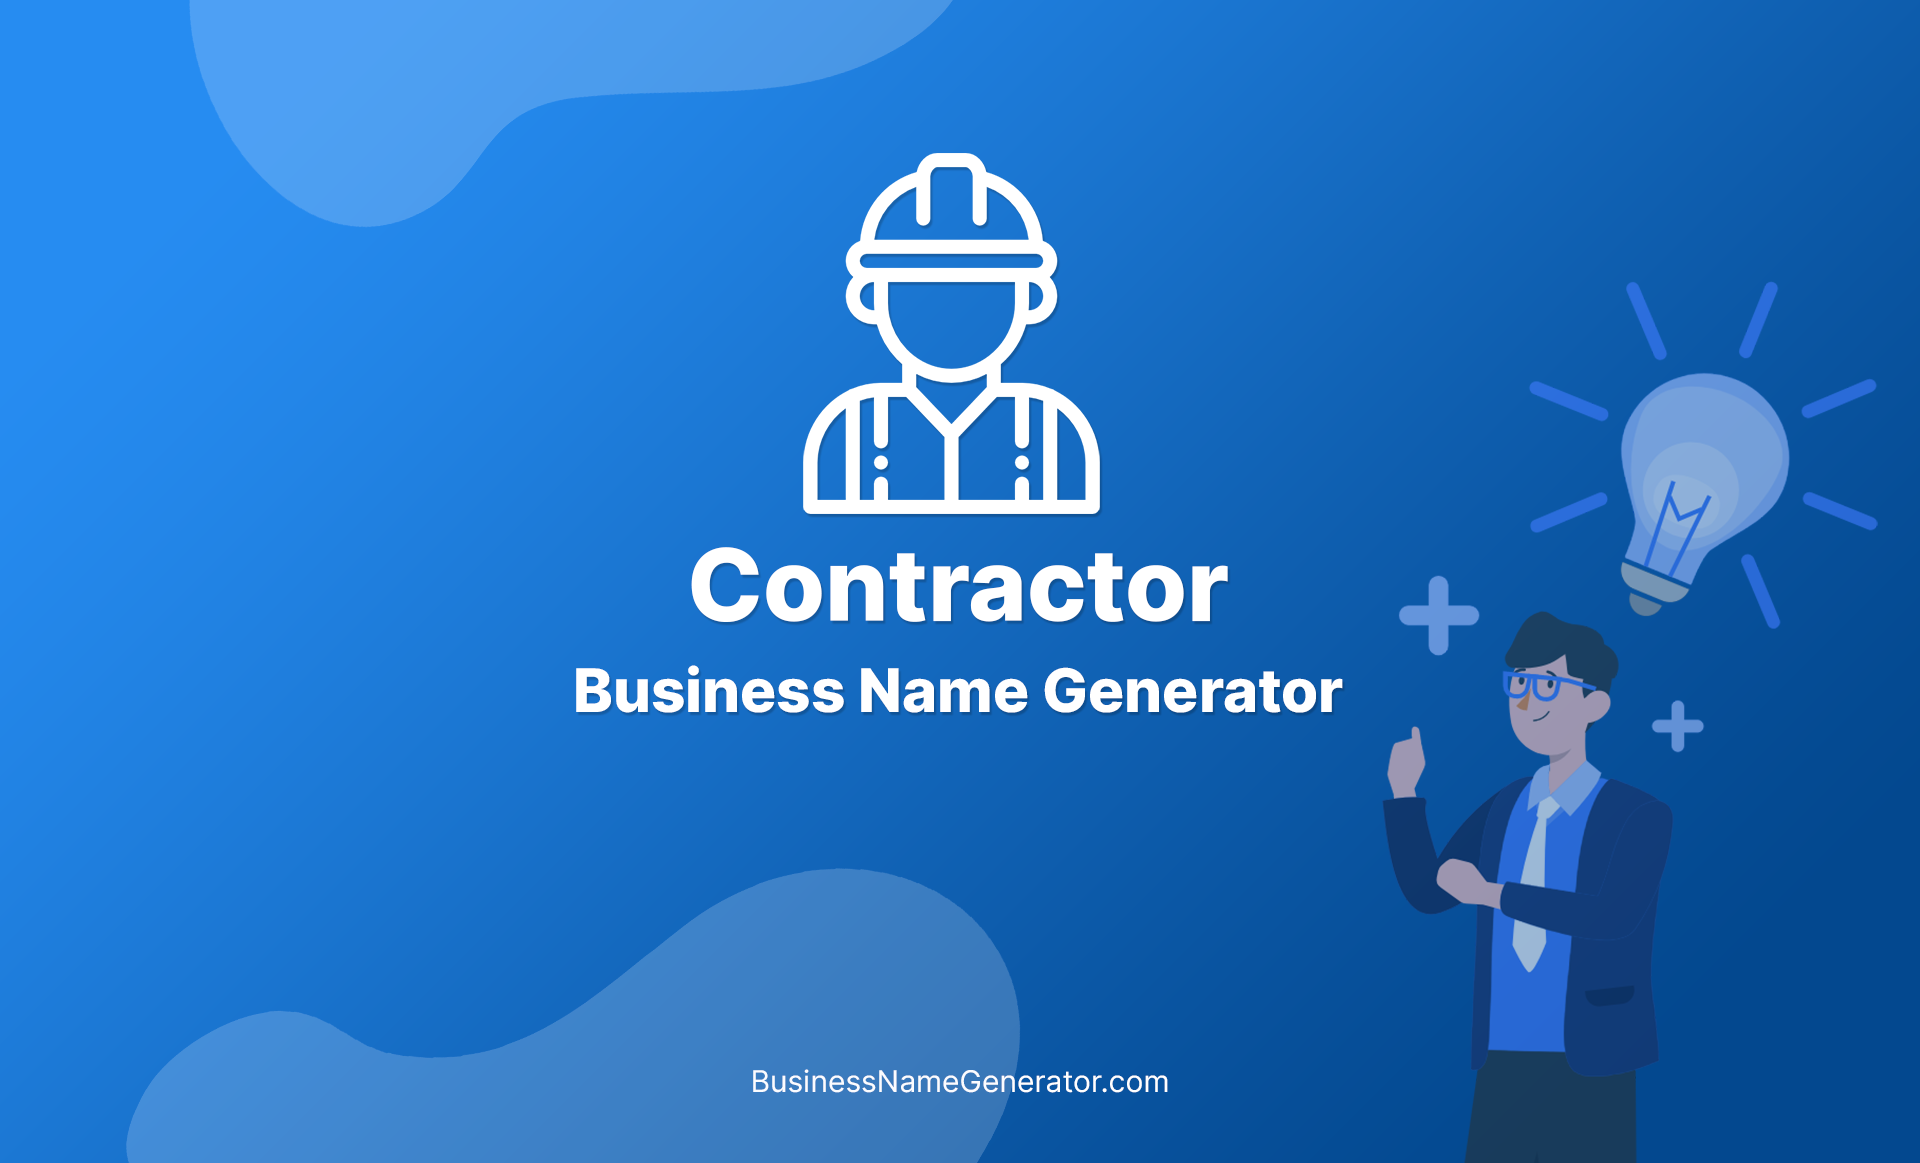 Contractor Business Name Generator